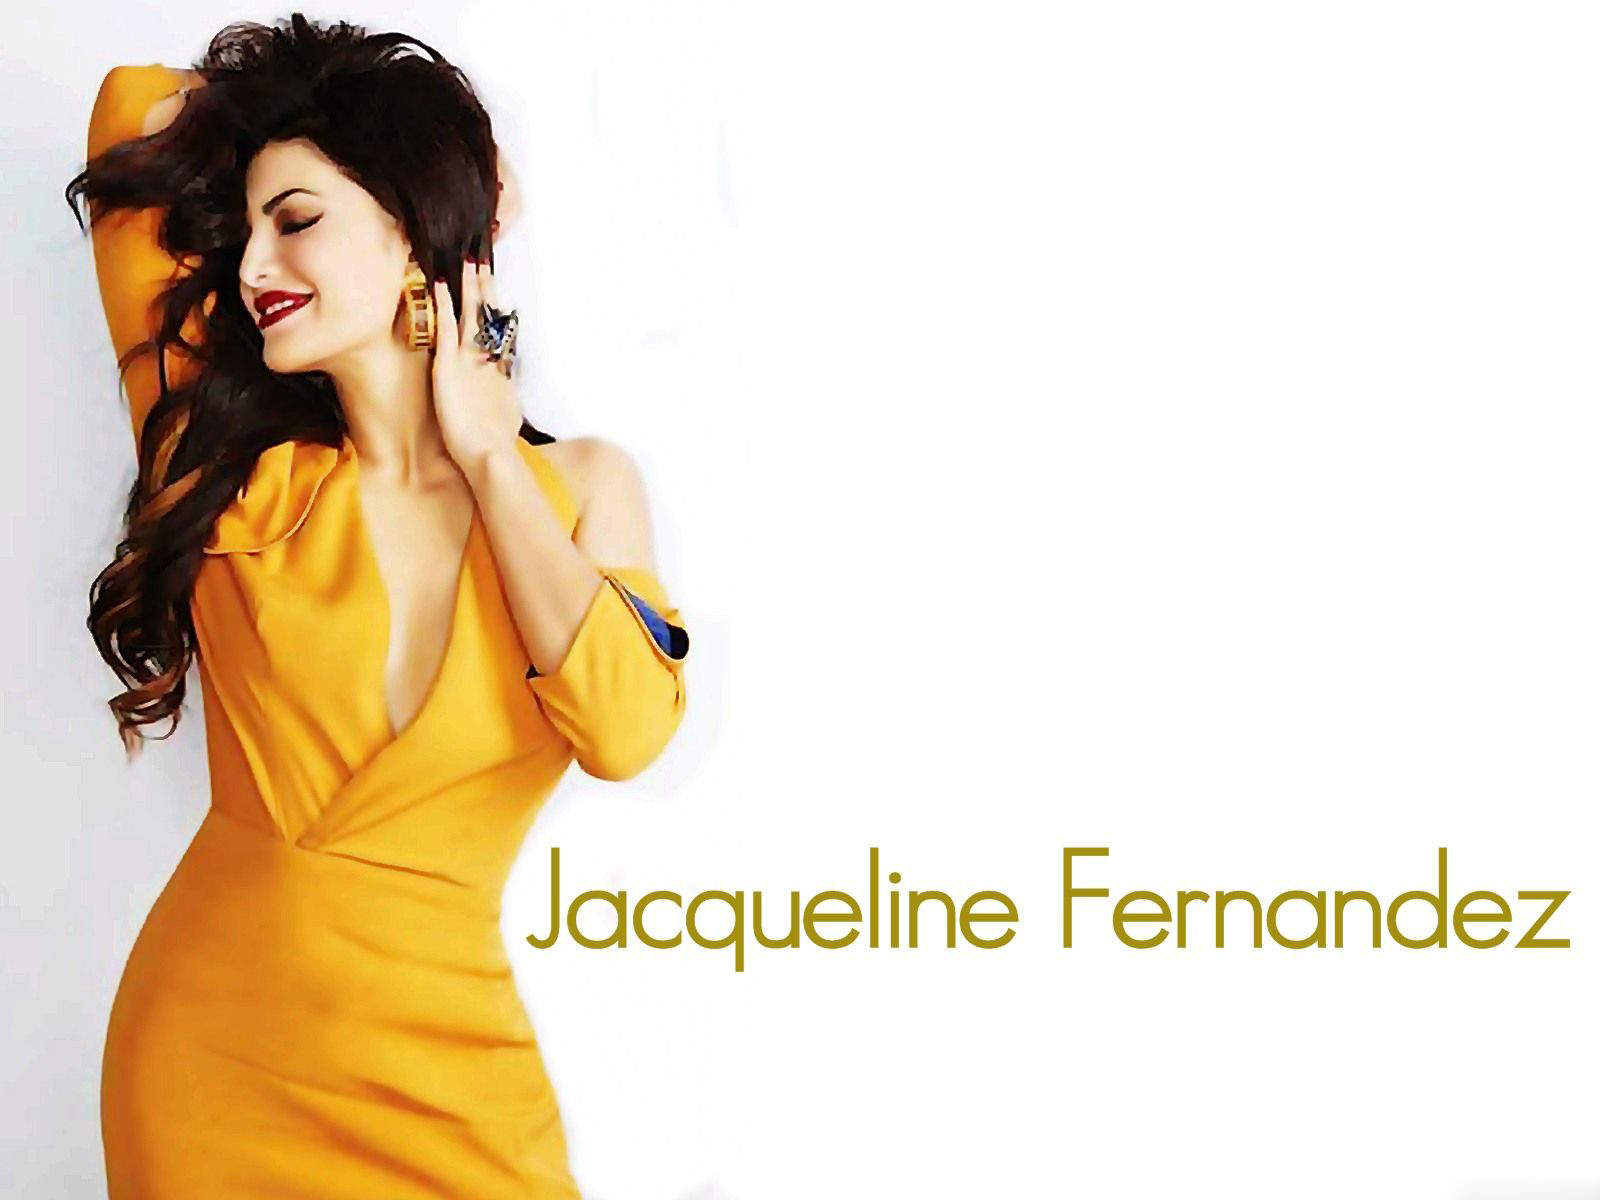 jacqueline fernandez hot latest wallpapers